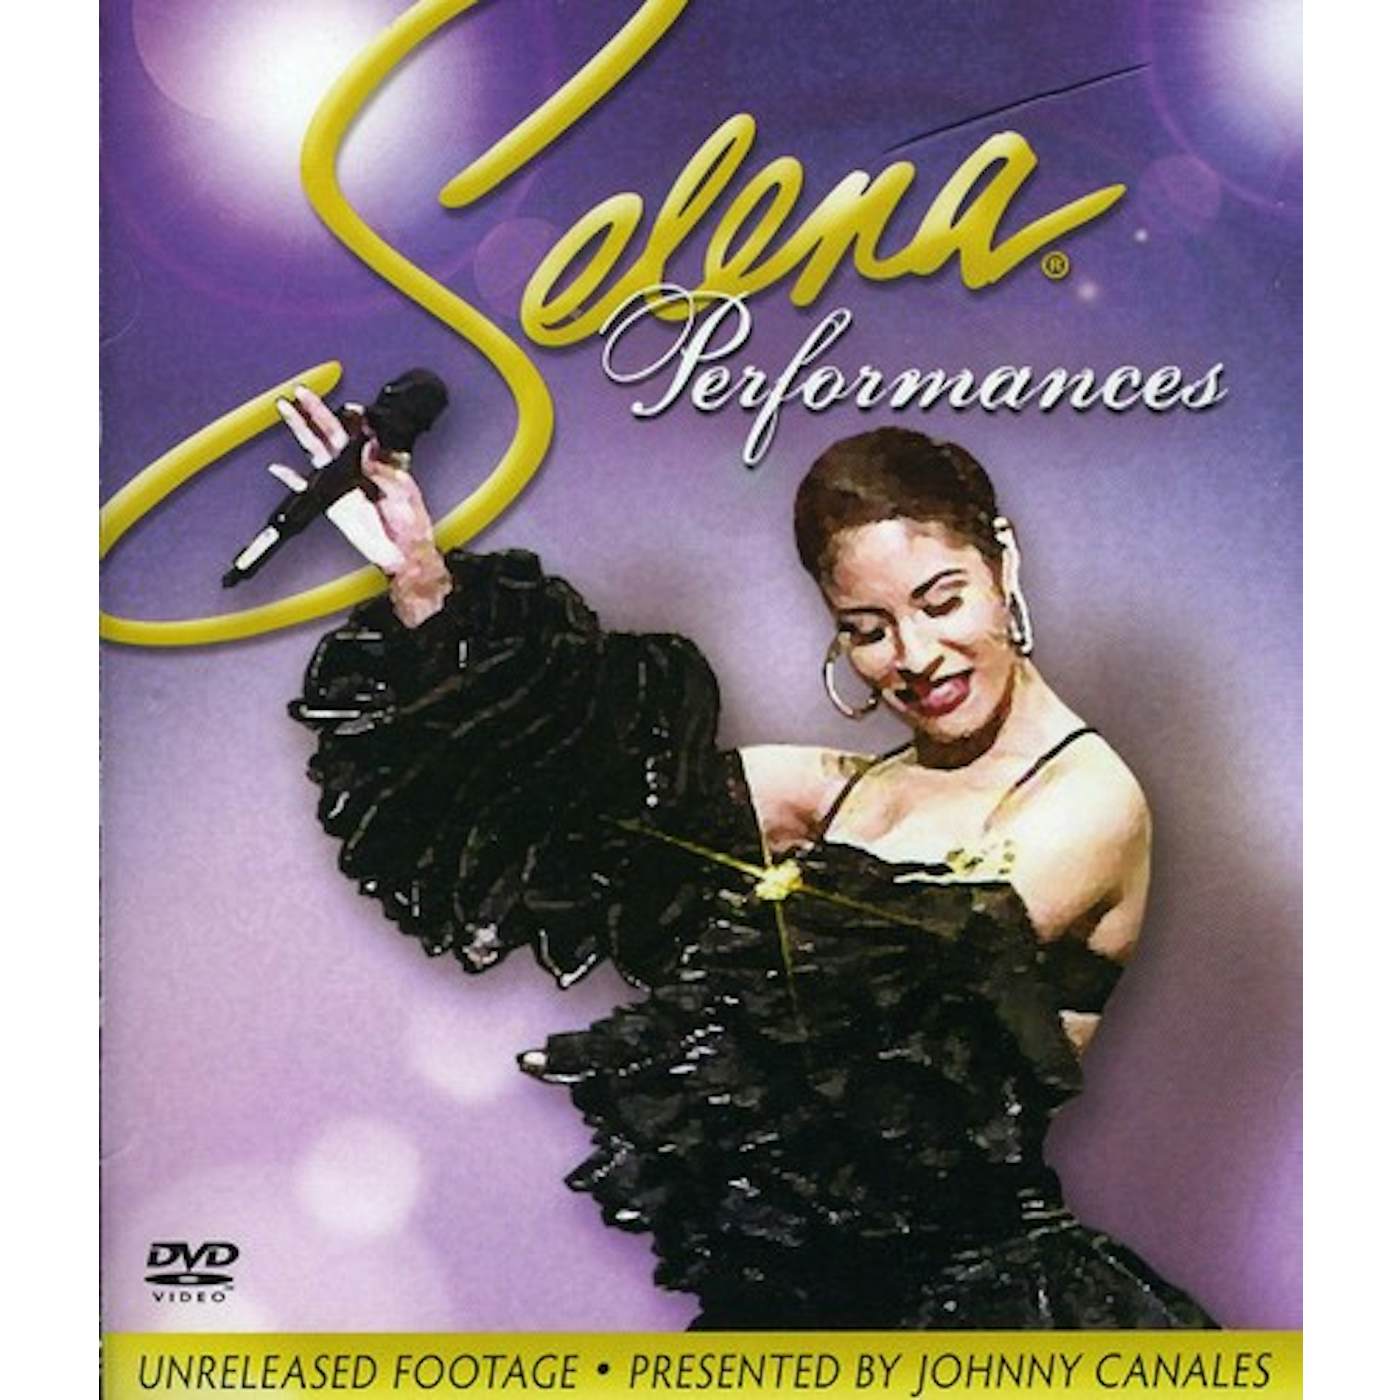 Selena PERFORMANCES DVD